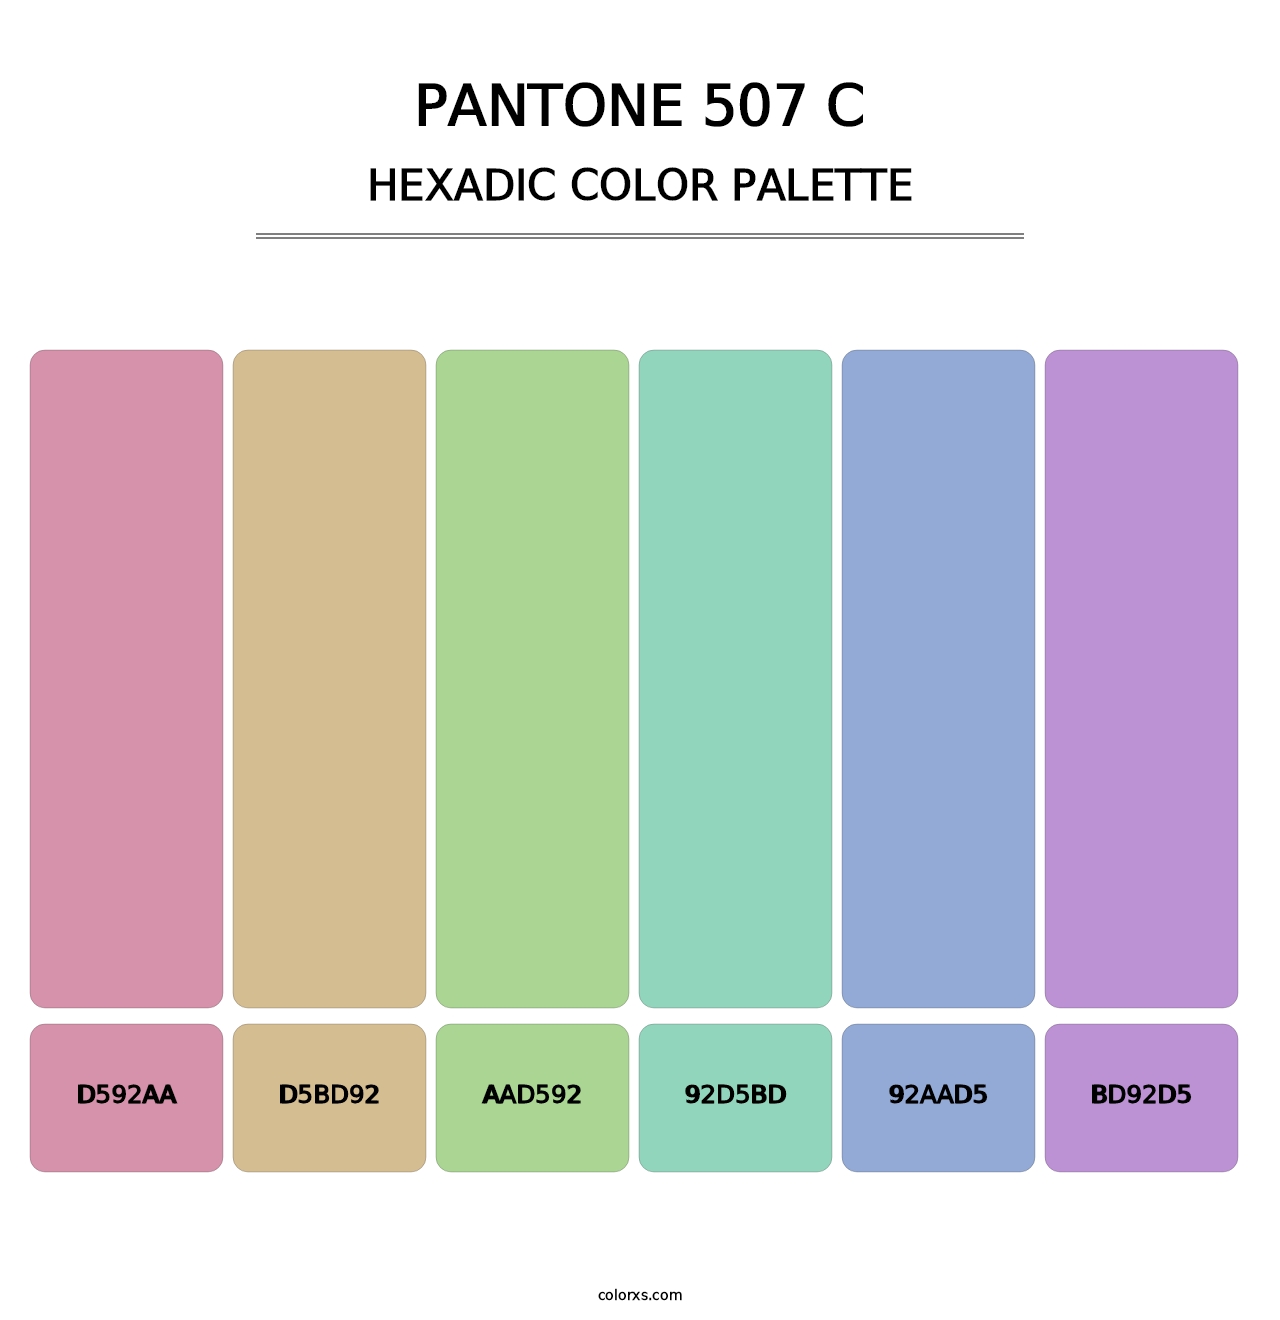 PANTONE 507 C - Hexadic Color Palette